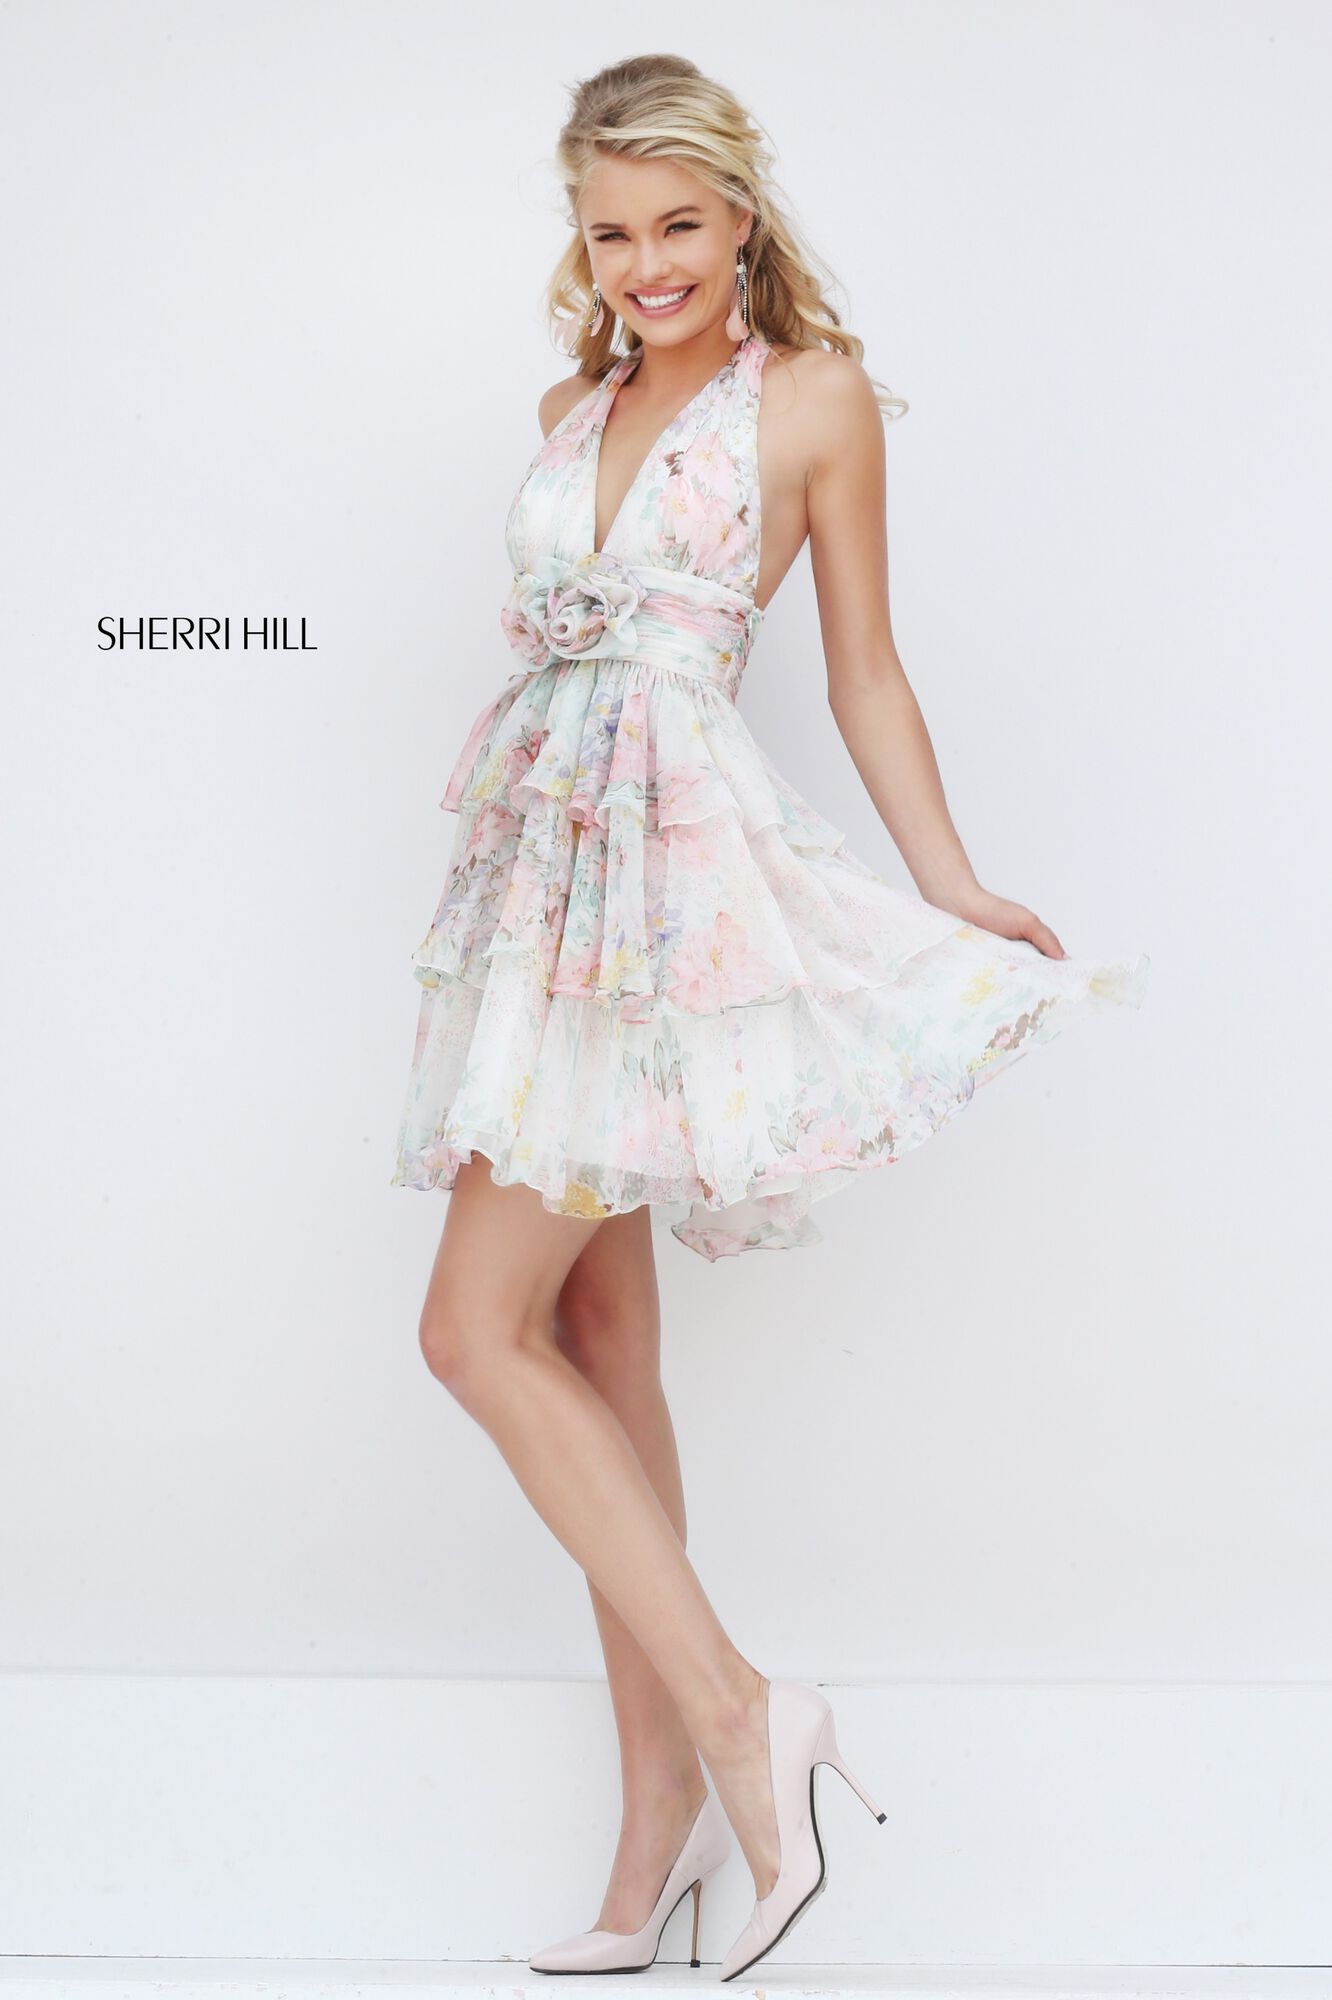 Sherri Hill 55474 Dress | Sherri Hill Dresses | Formal Approach 10 / Fuchsia